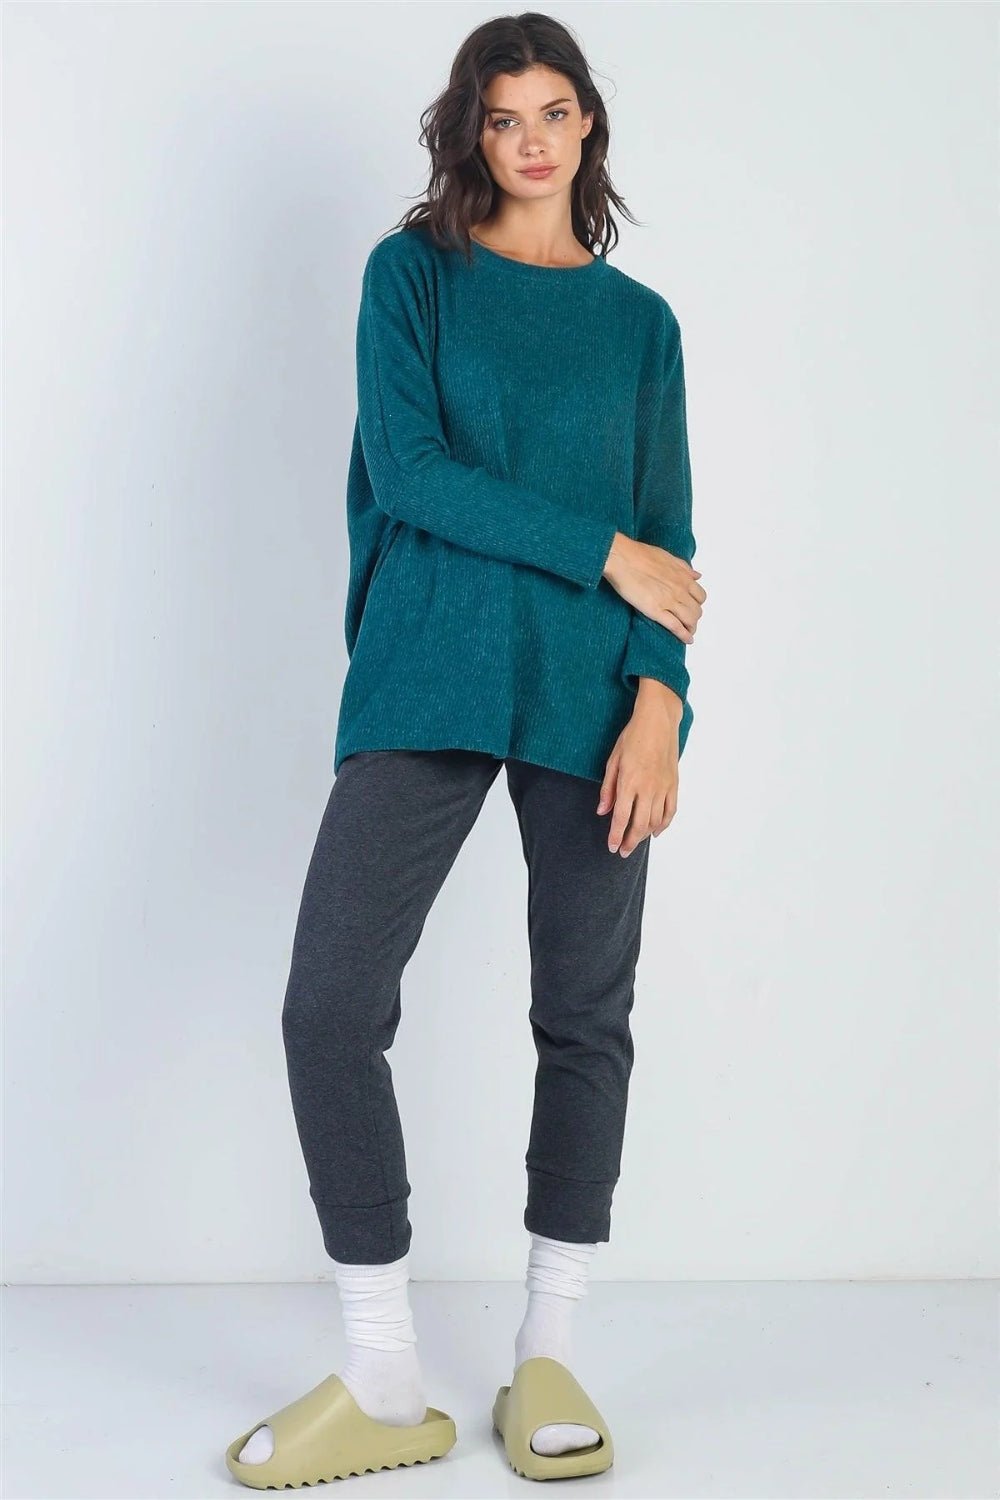 Cherish Apparel Round Neck Long Sleeve Sweater - Admiresty